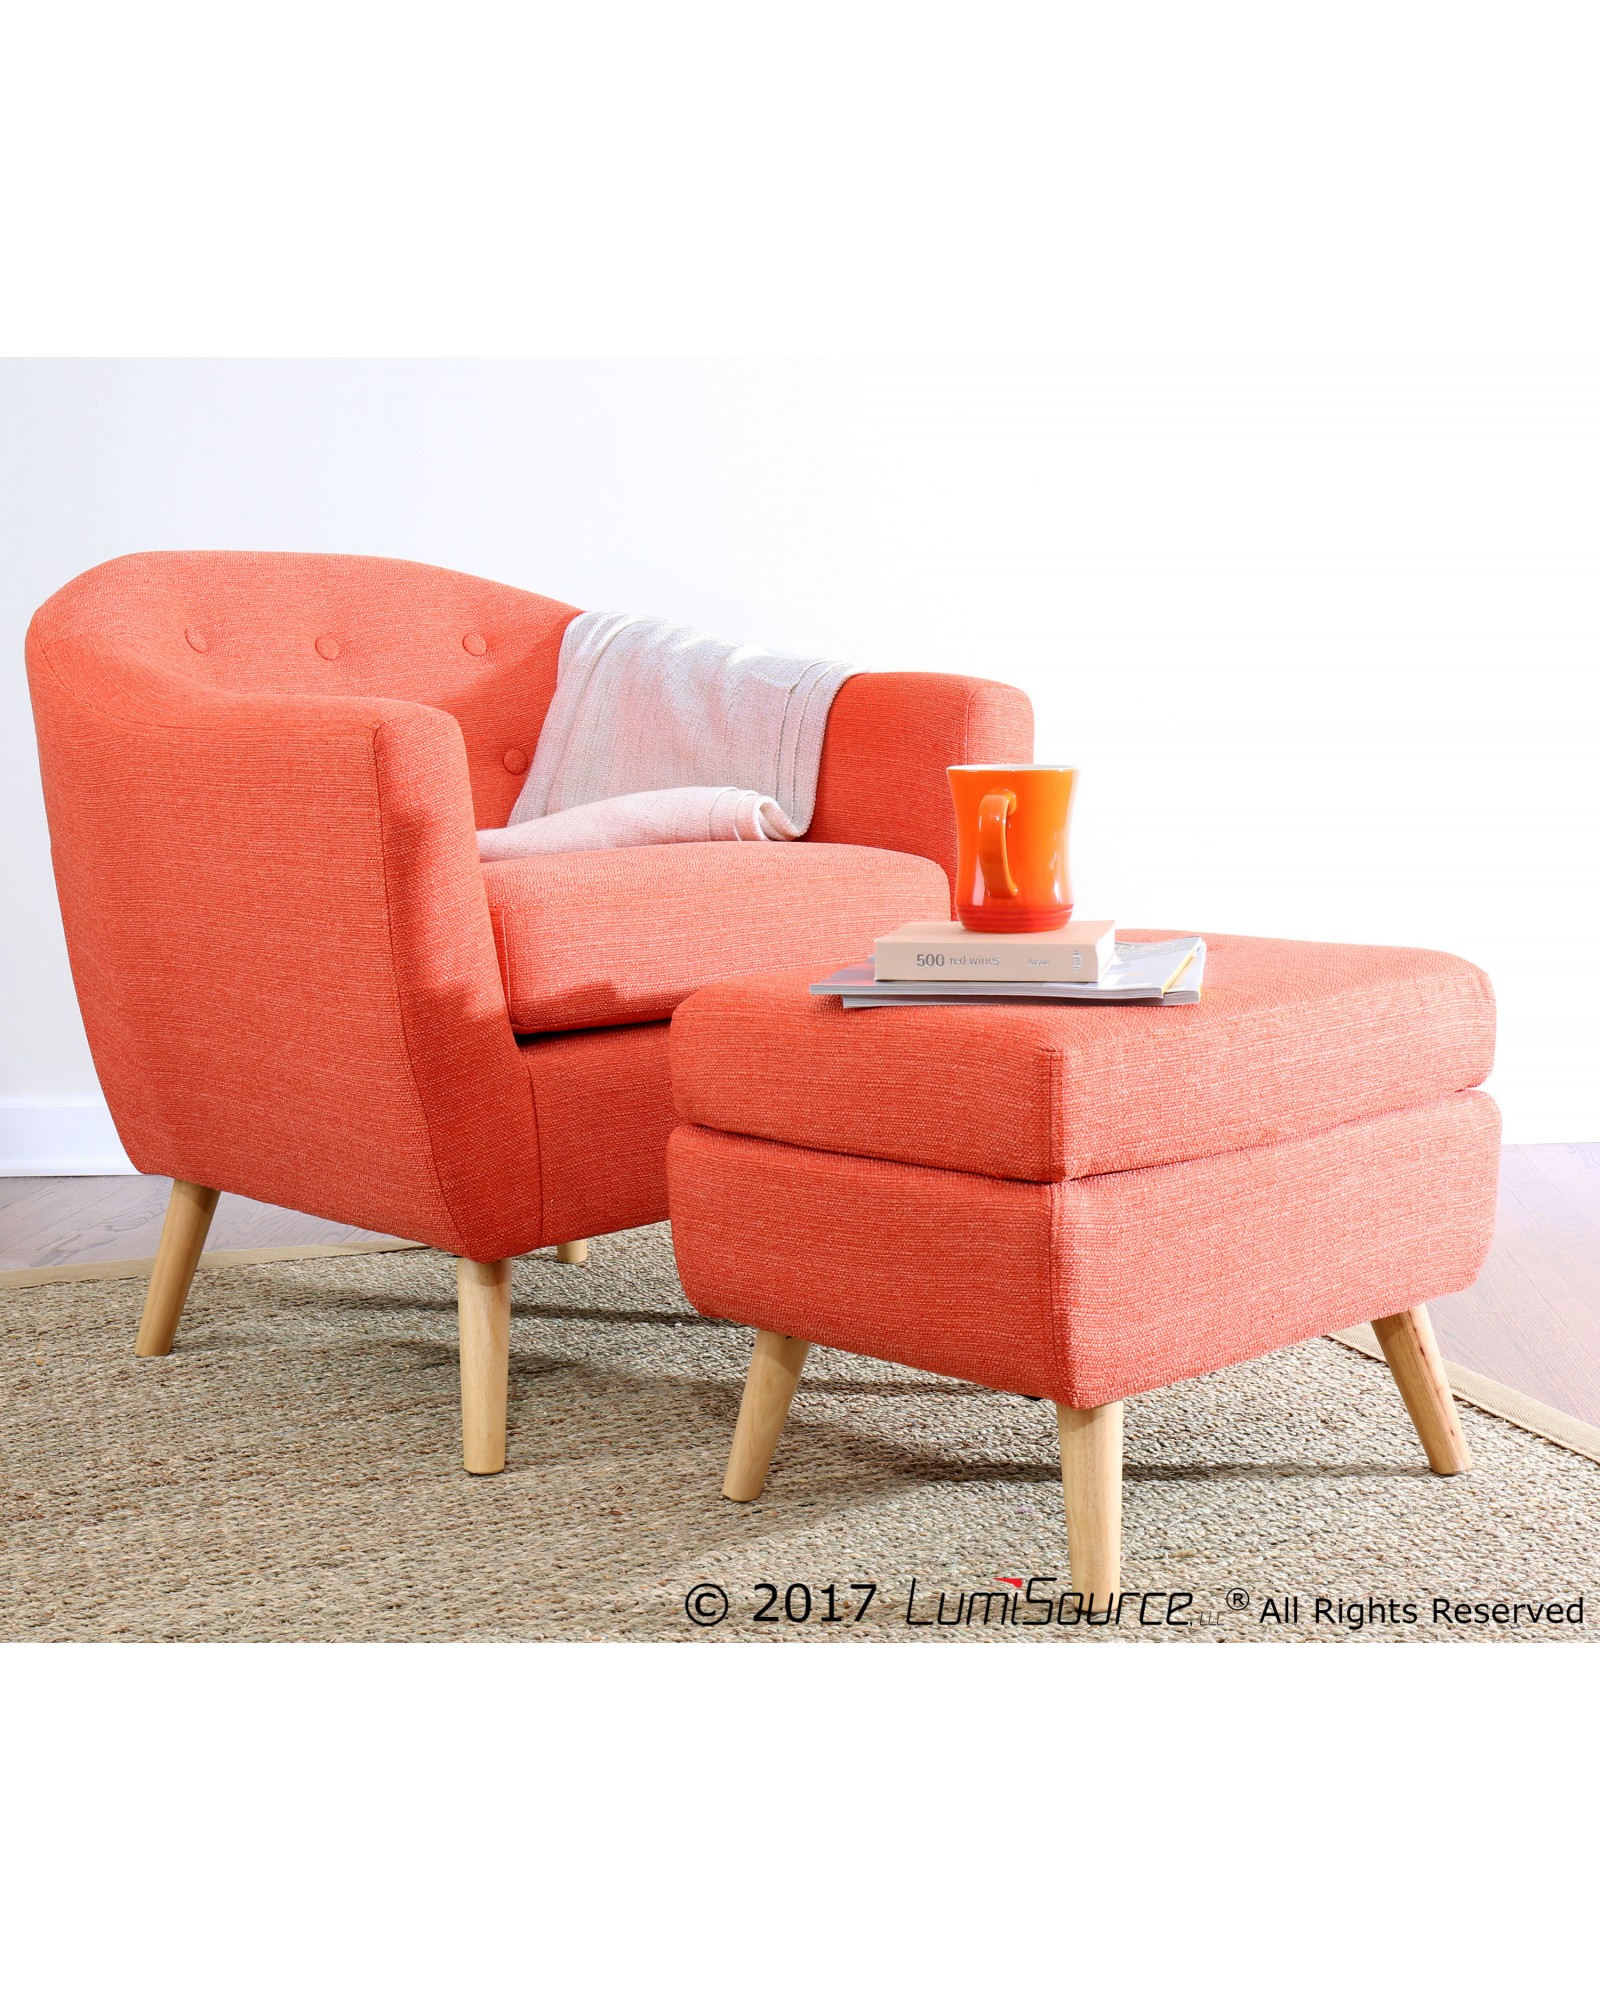 Rockwell Mid Century Modern Accent Chair in Orange